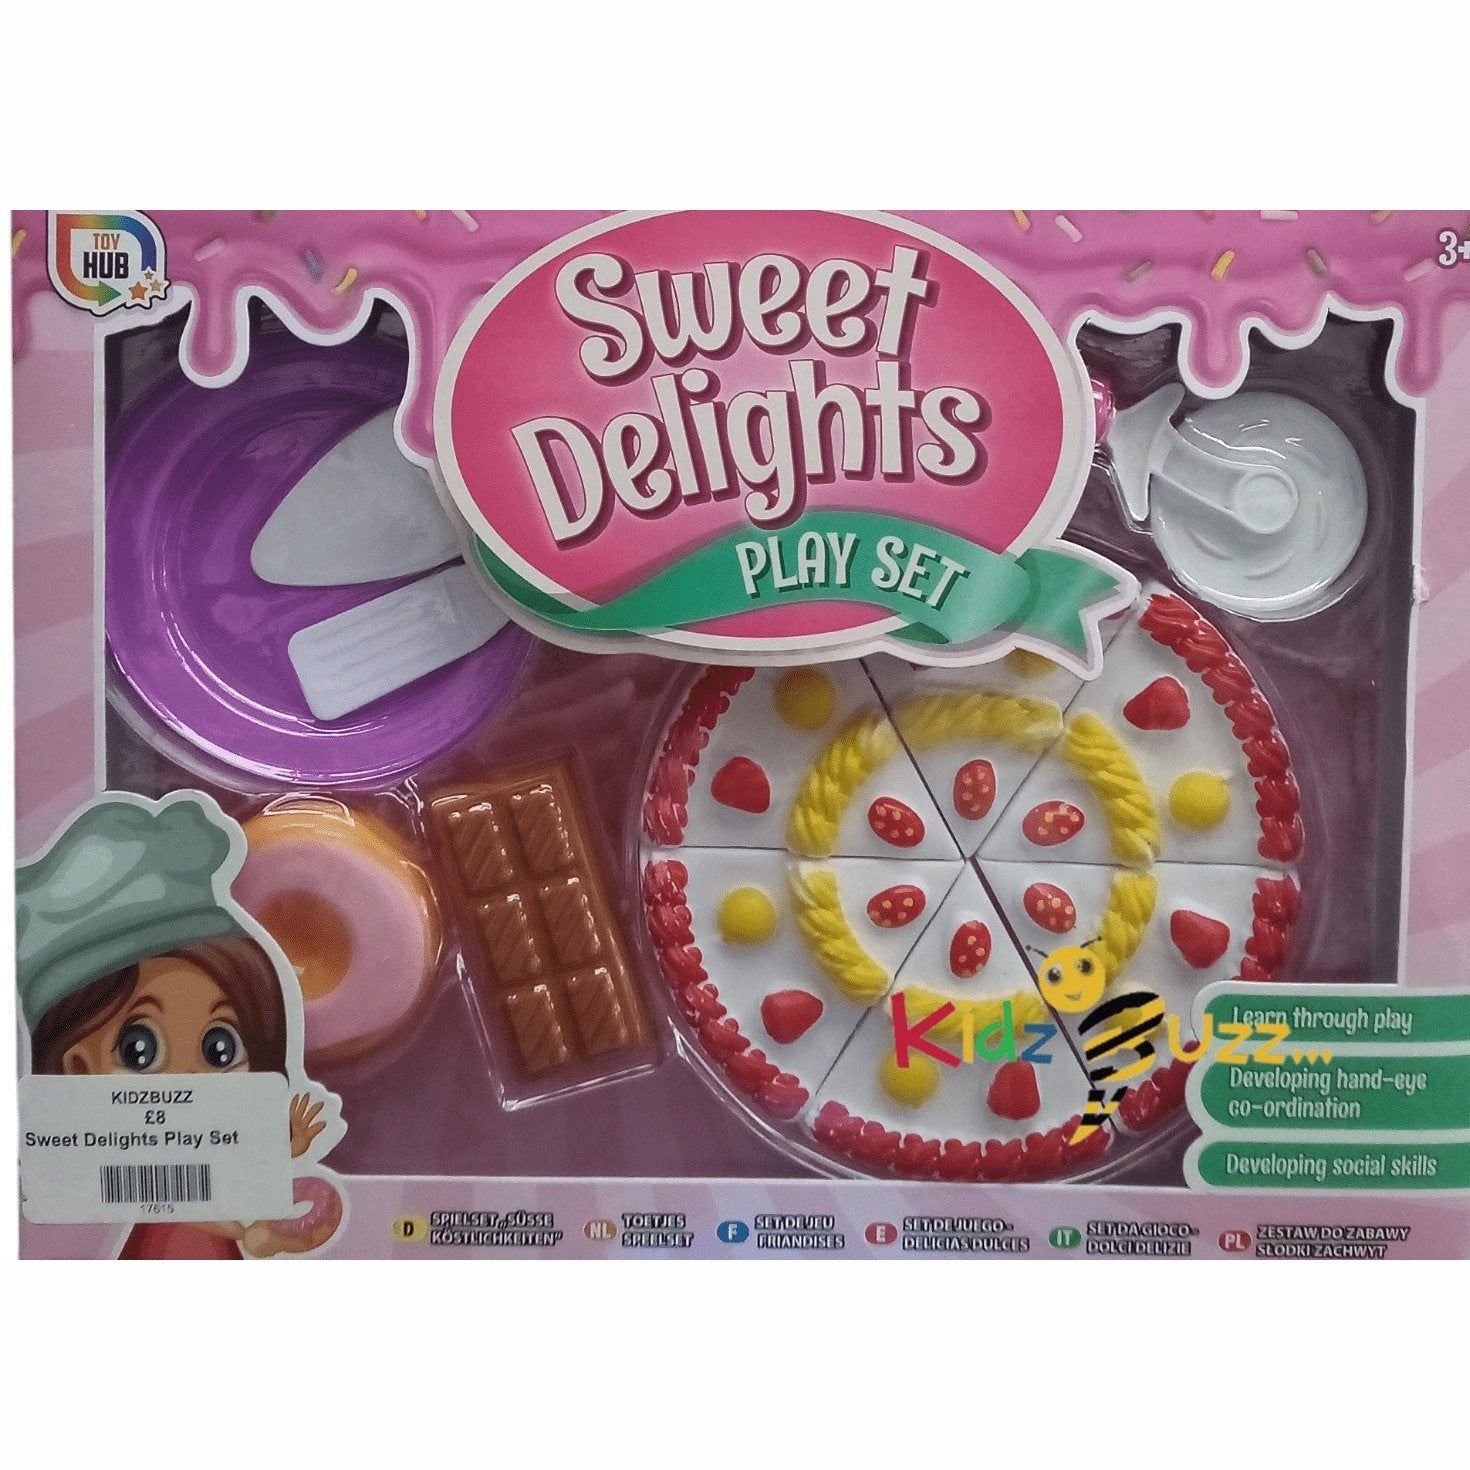 Sweet Delights Play Set - kidzbuzzz